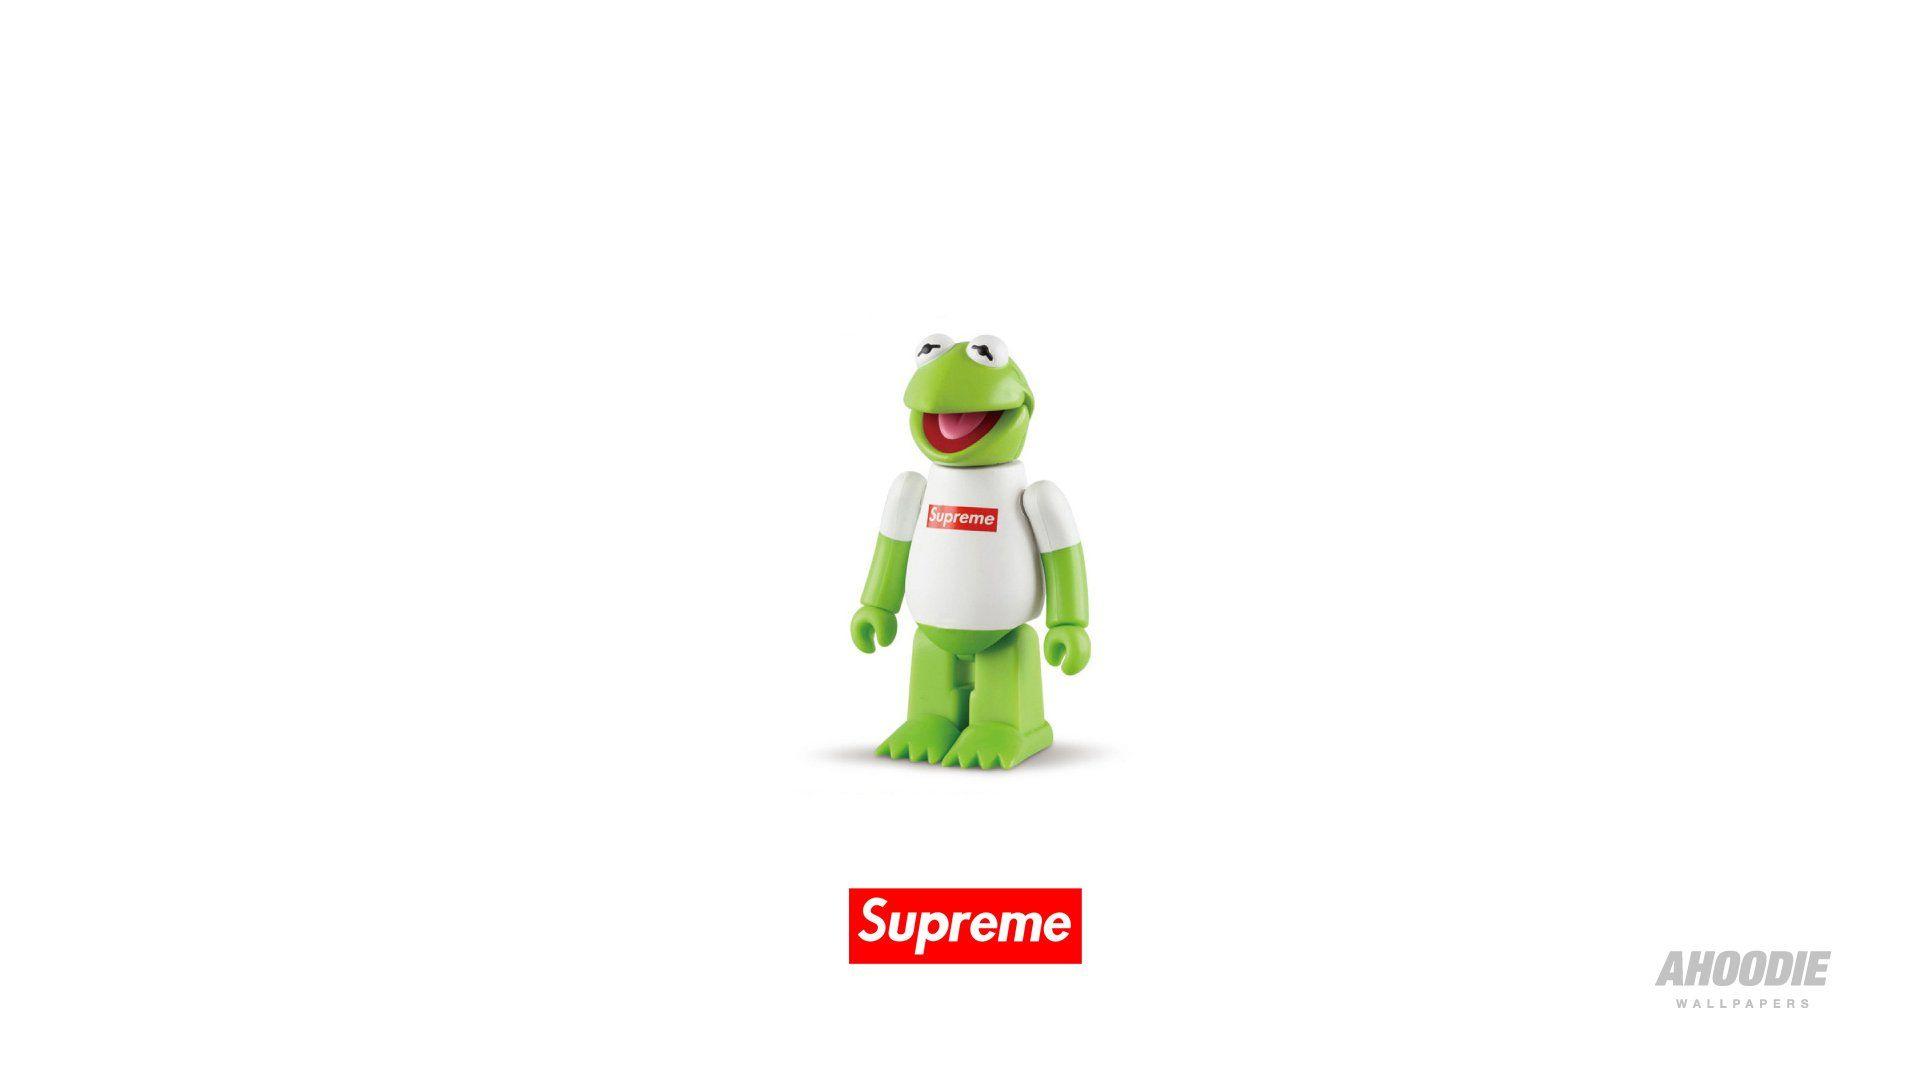 Supreme Kermit Wallpapers - Top Free Supreme Kermit Backgrounds